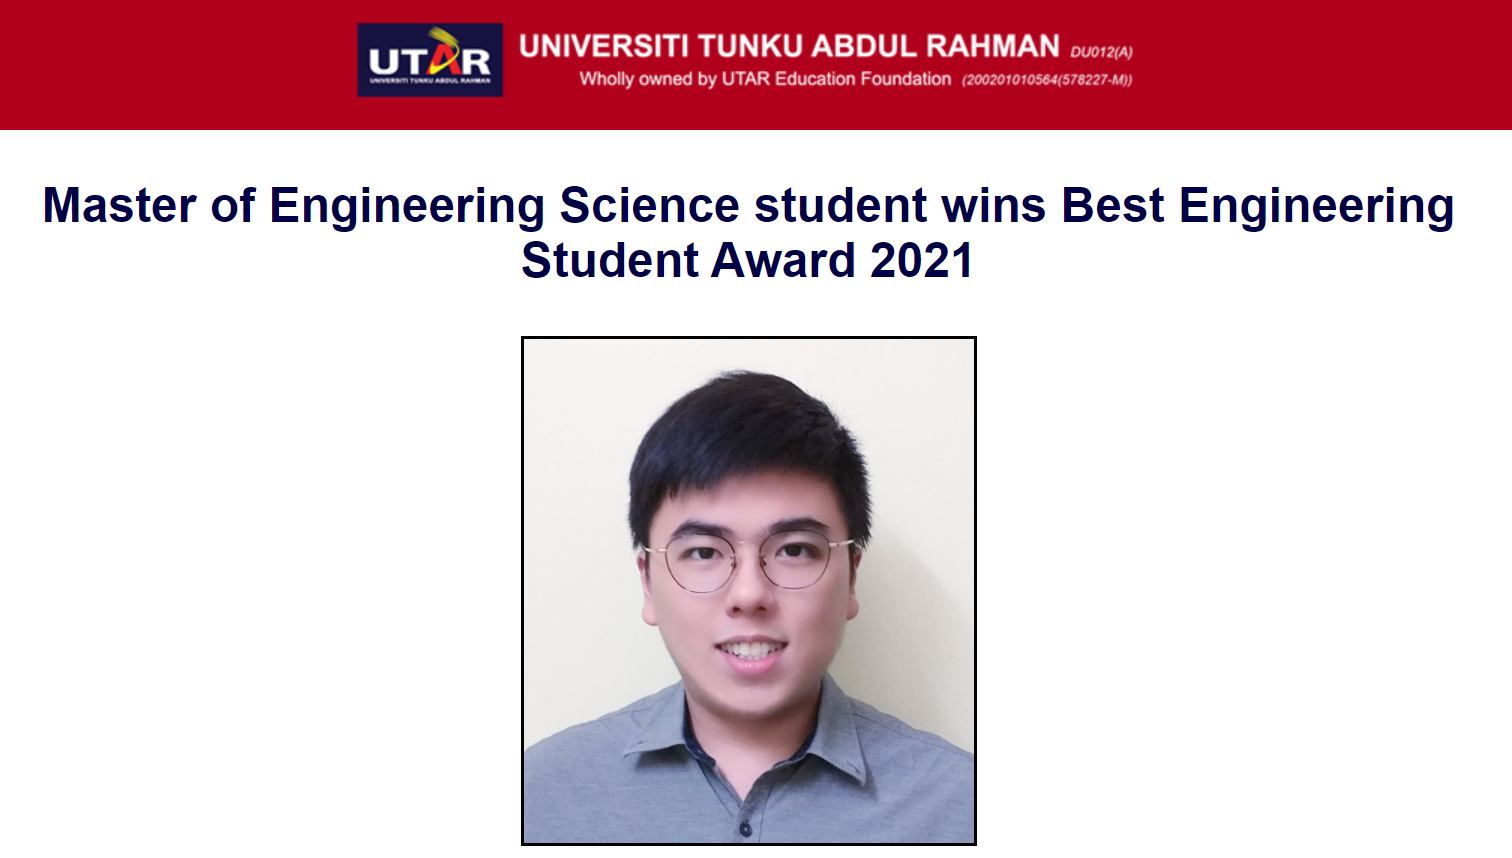 The future is here: 24yo utar student snags engineering award with groundbreaking rfid design | weirdkaya